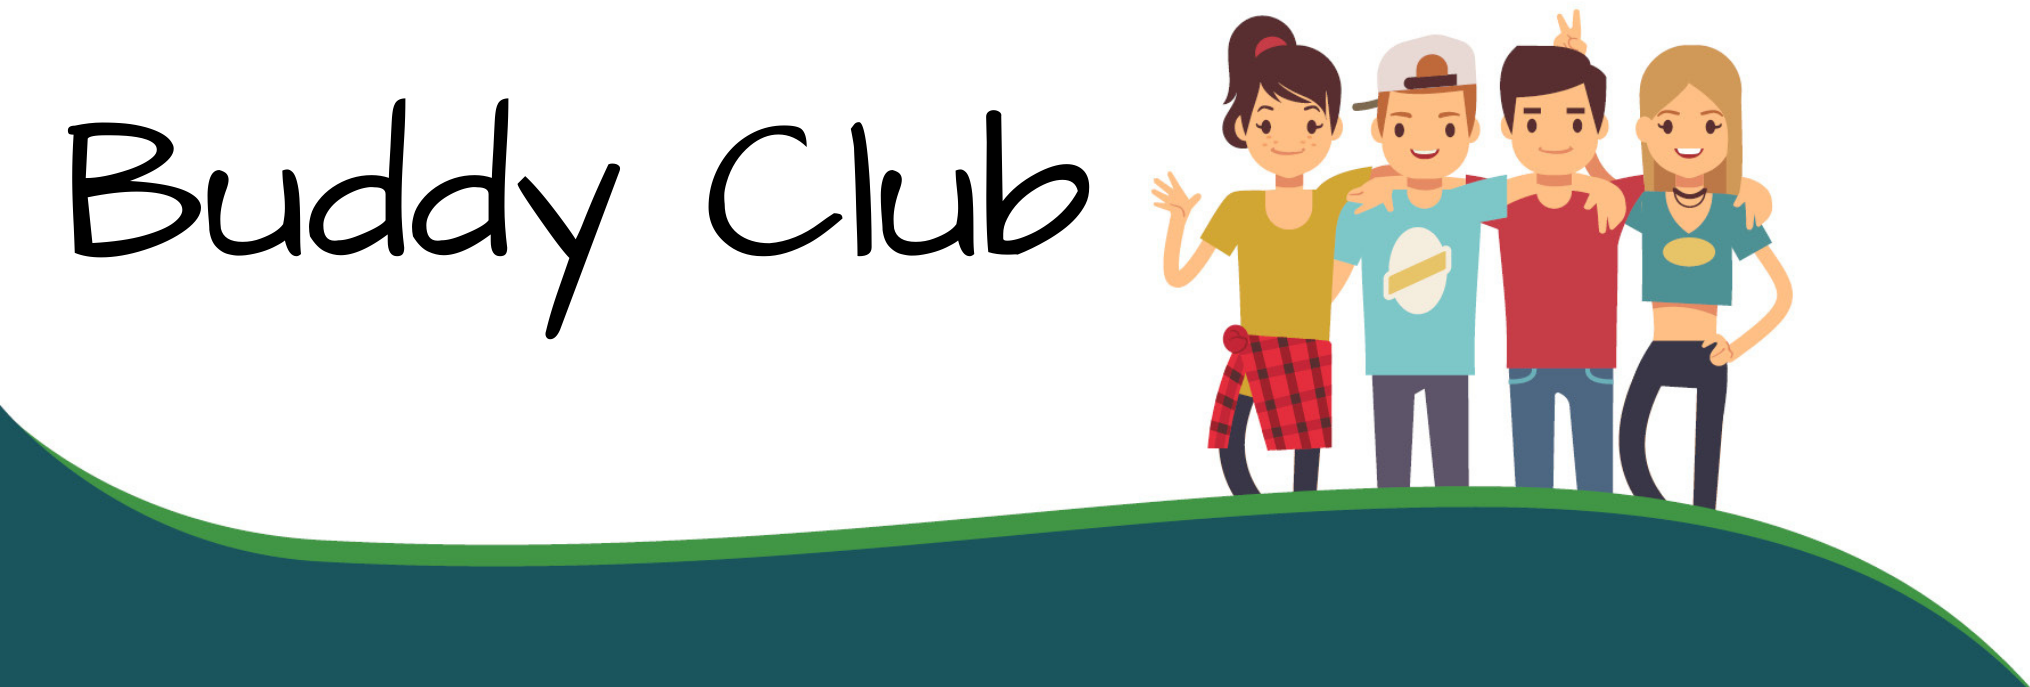 https://ucpstan.org/wp-content/uploads/2021/03/Buddy-Club-logo.png